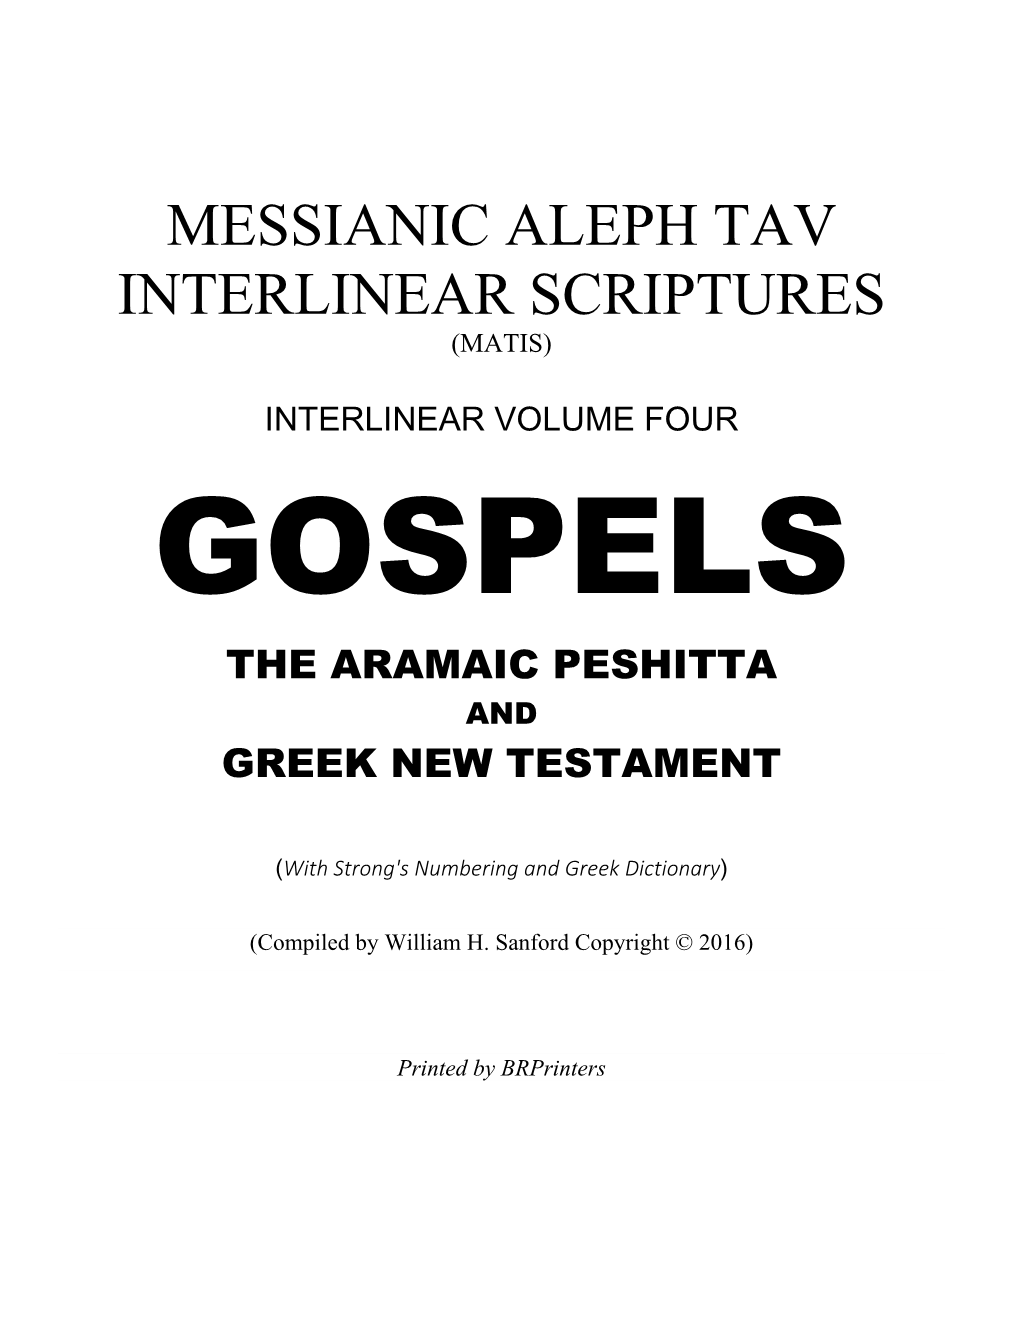 “The GOSPELS” (Messianic Aleph Tav Interlinear Scriptures)